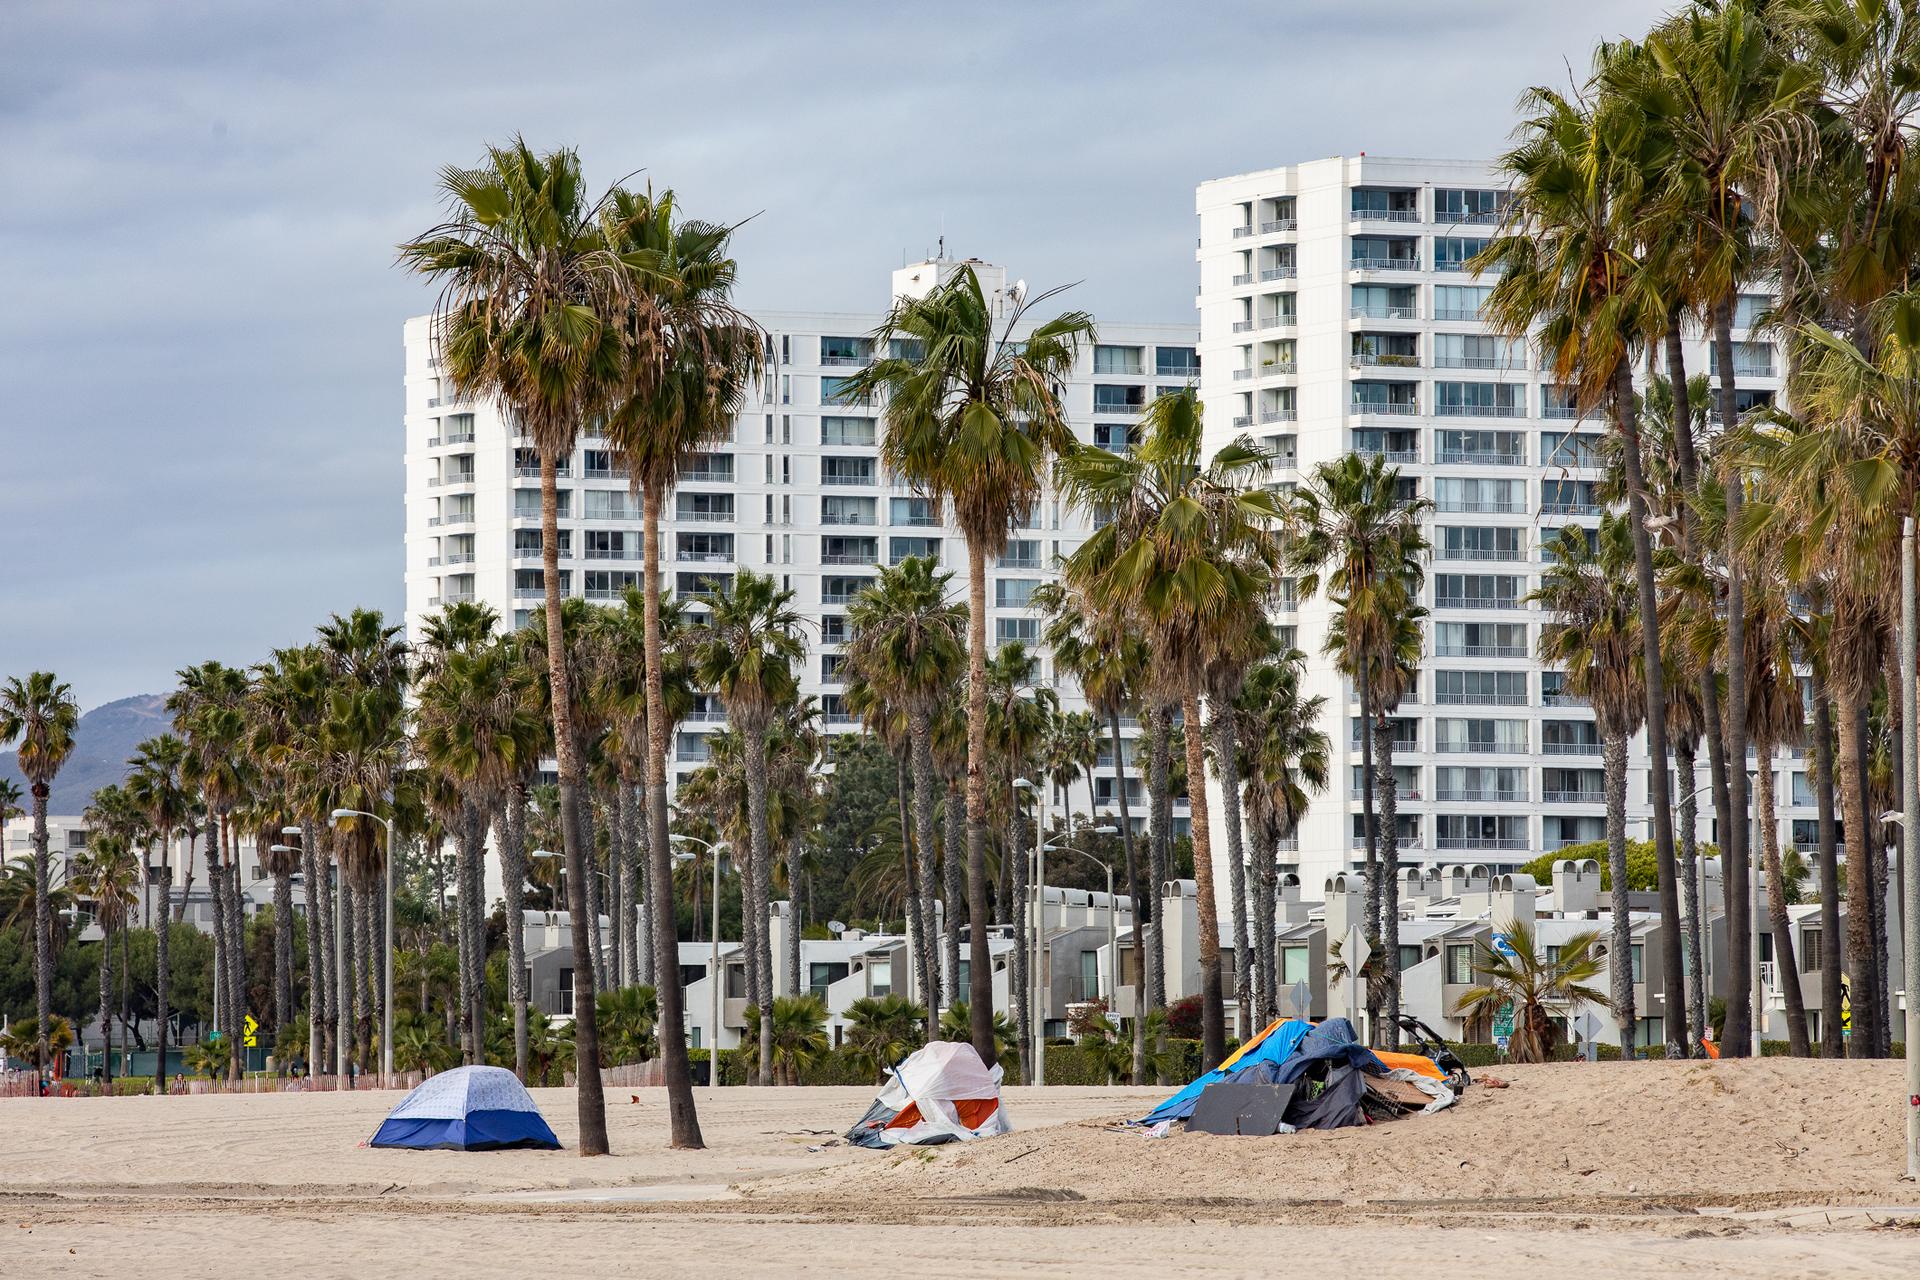 A homeless encampment sits in front of luxury hotels in Santa Monica, Calif., on Jan. 27, 2021. (John Fredricks/The Epoch Times)